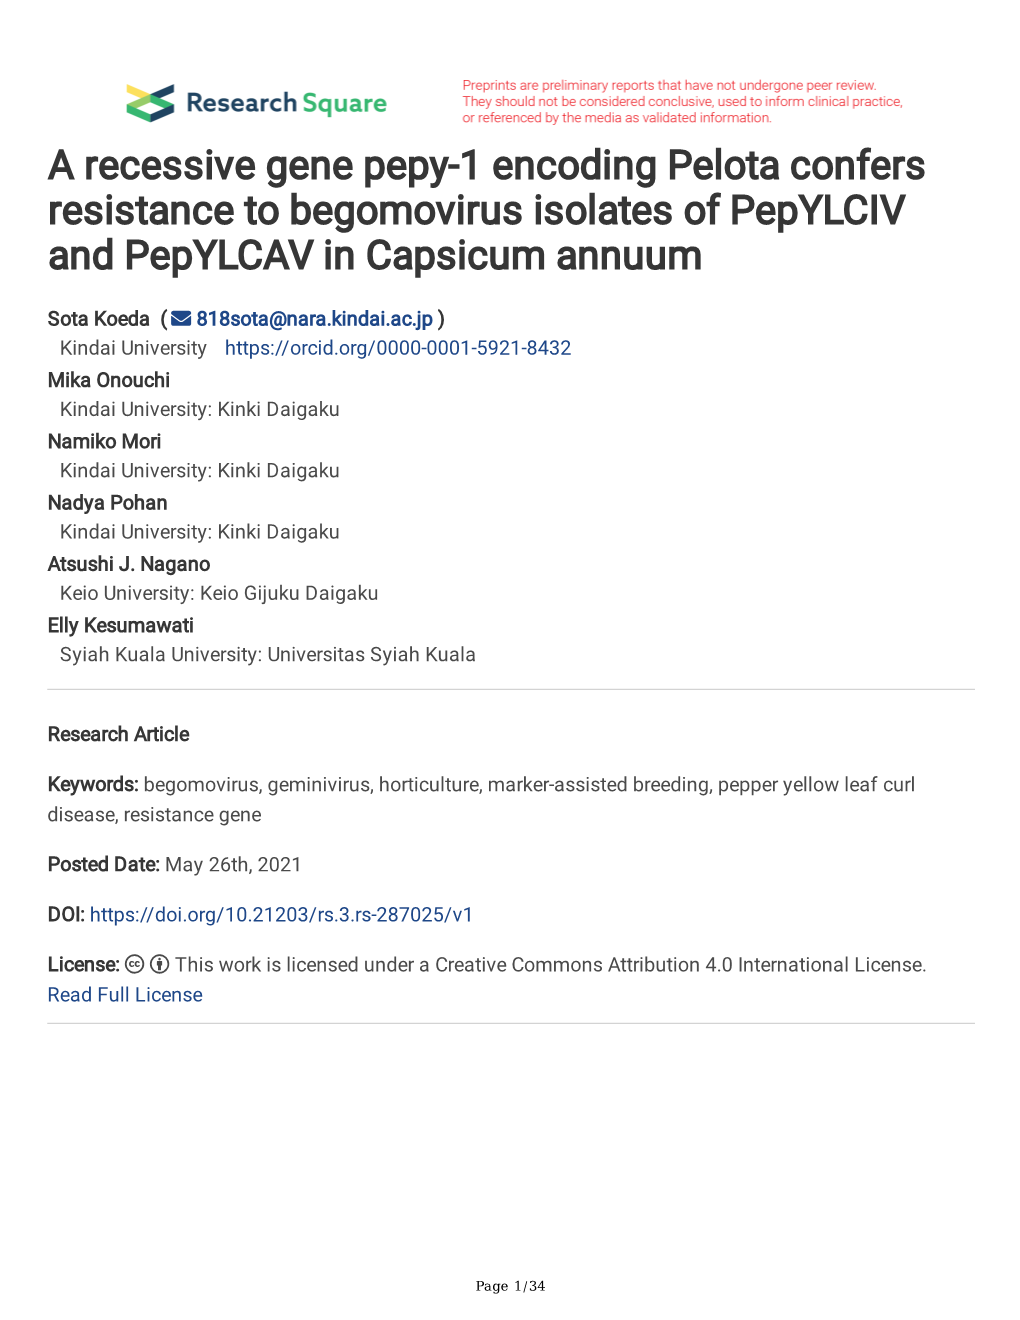 A Recessive Gene Pepy-1 Encoding Pelota Confers Resistance to Begomovirus Isolates of Pepylciv and Pepylcav in Capsicum Annuum